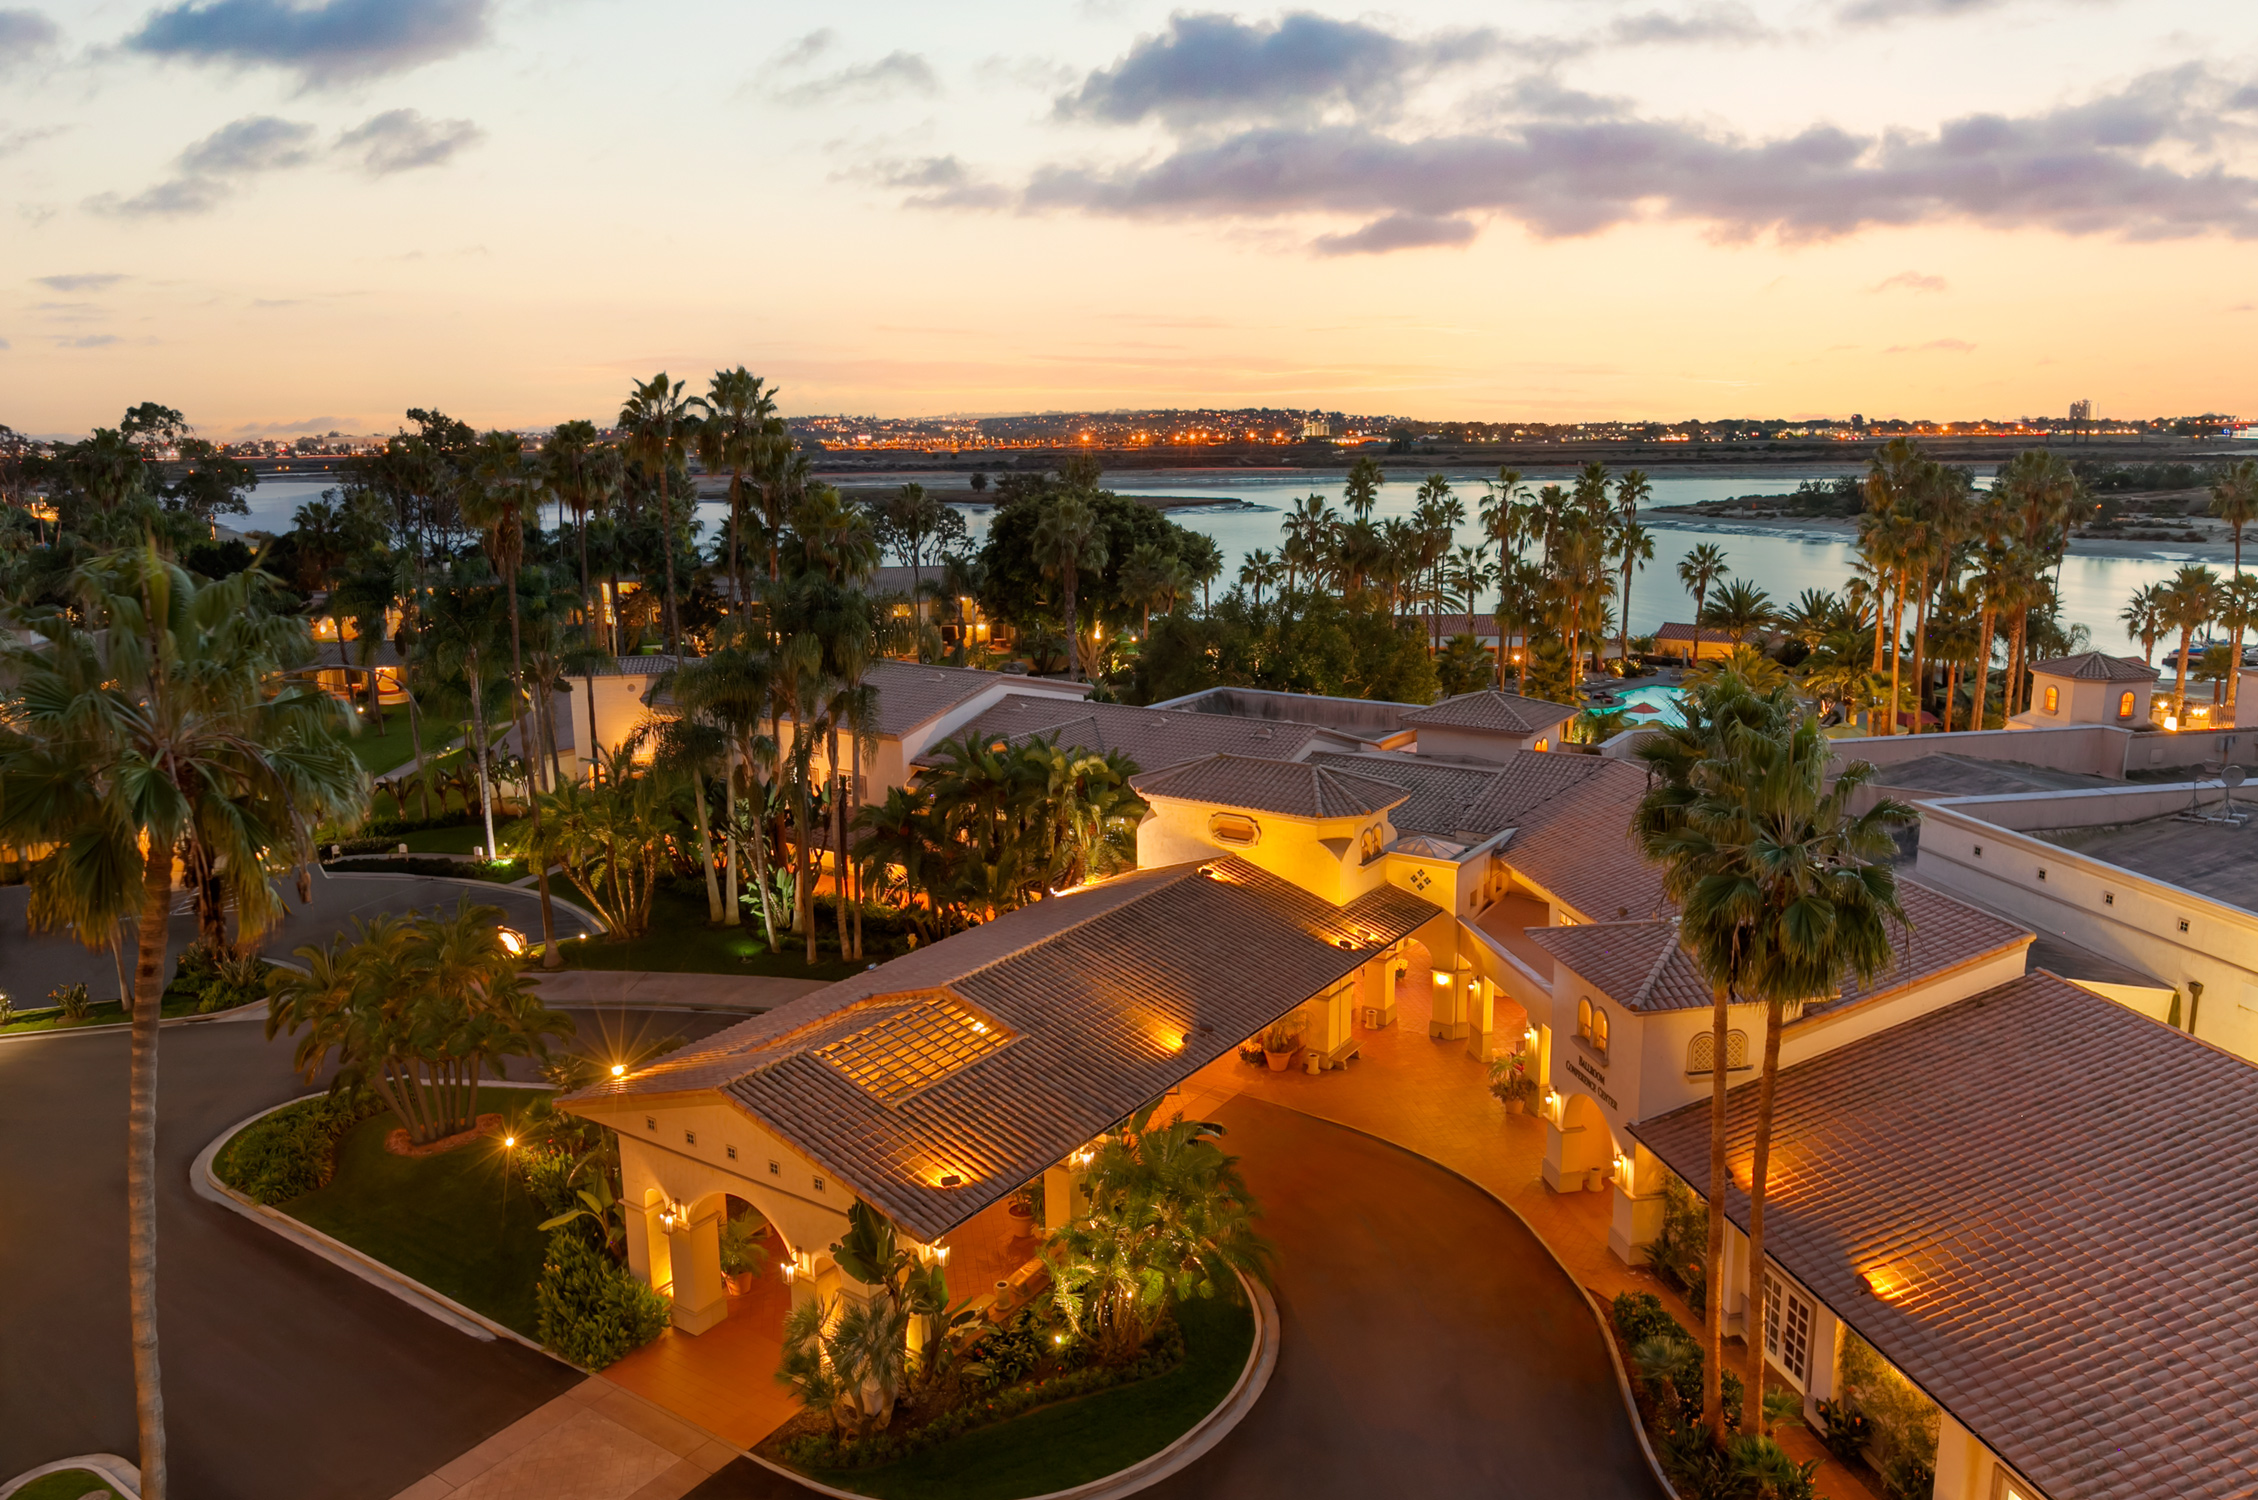 San Diego Mission Bay Resort at sunset.